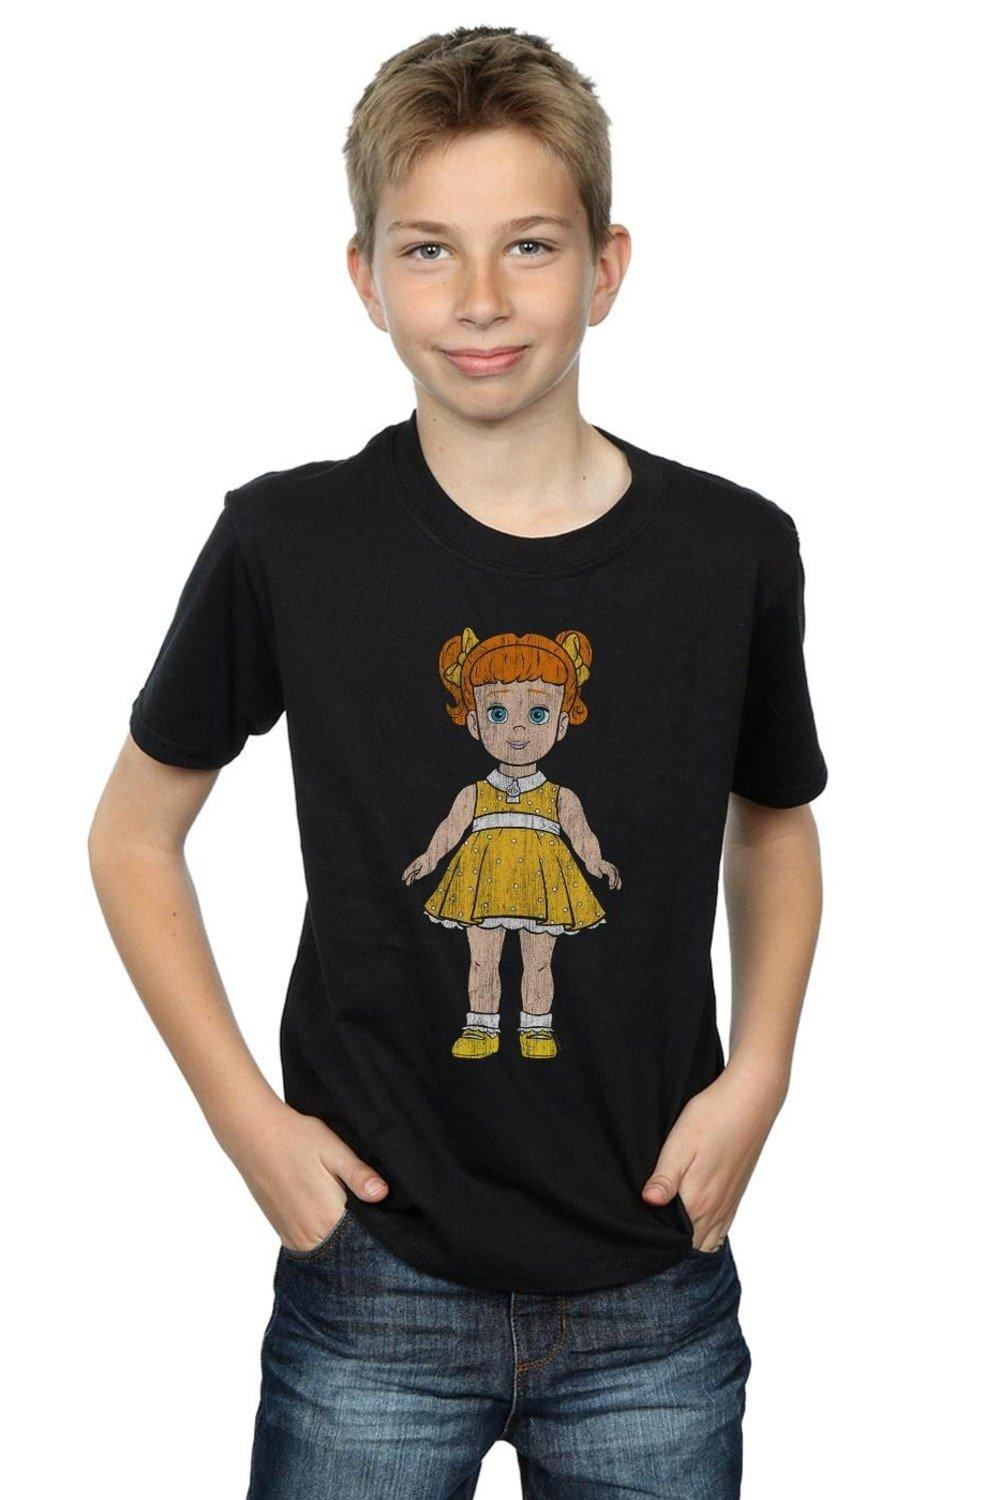 Toy Story 4 Gabby Gabby Pose T-Shirt